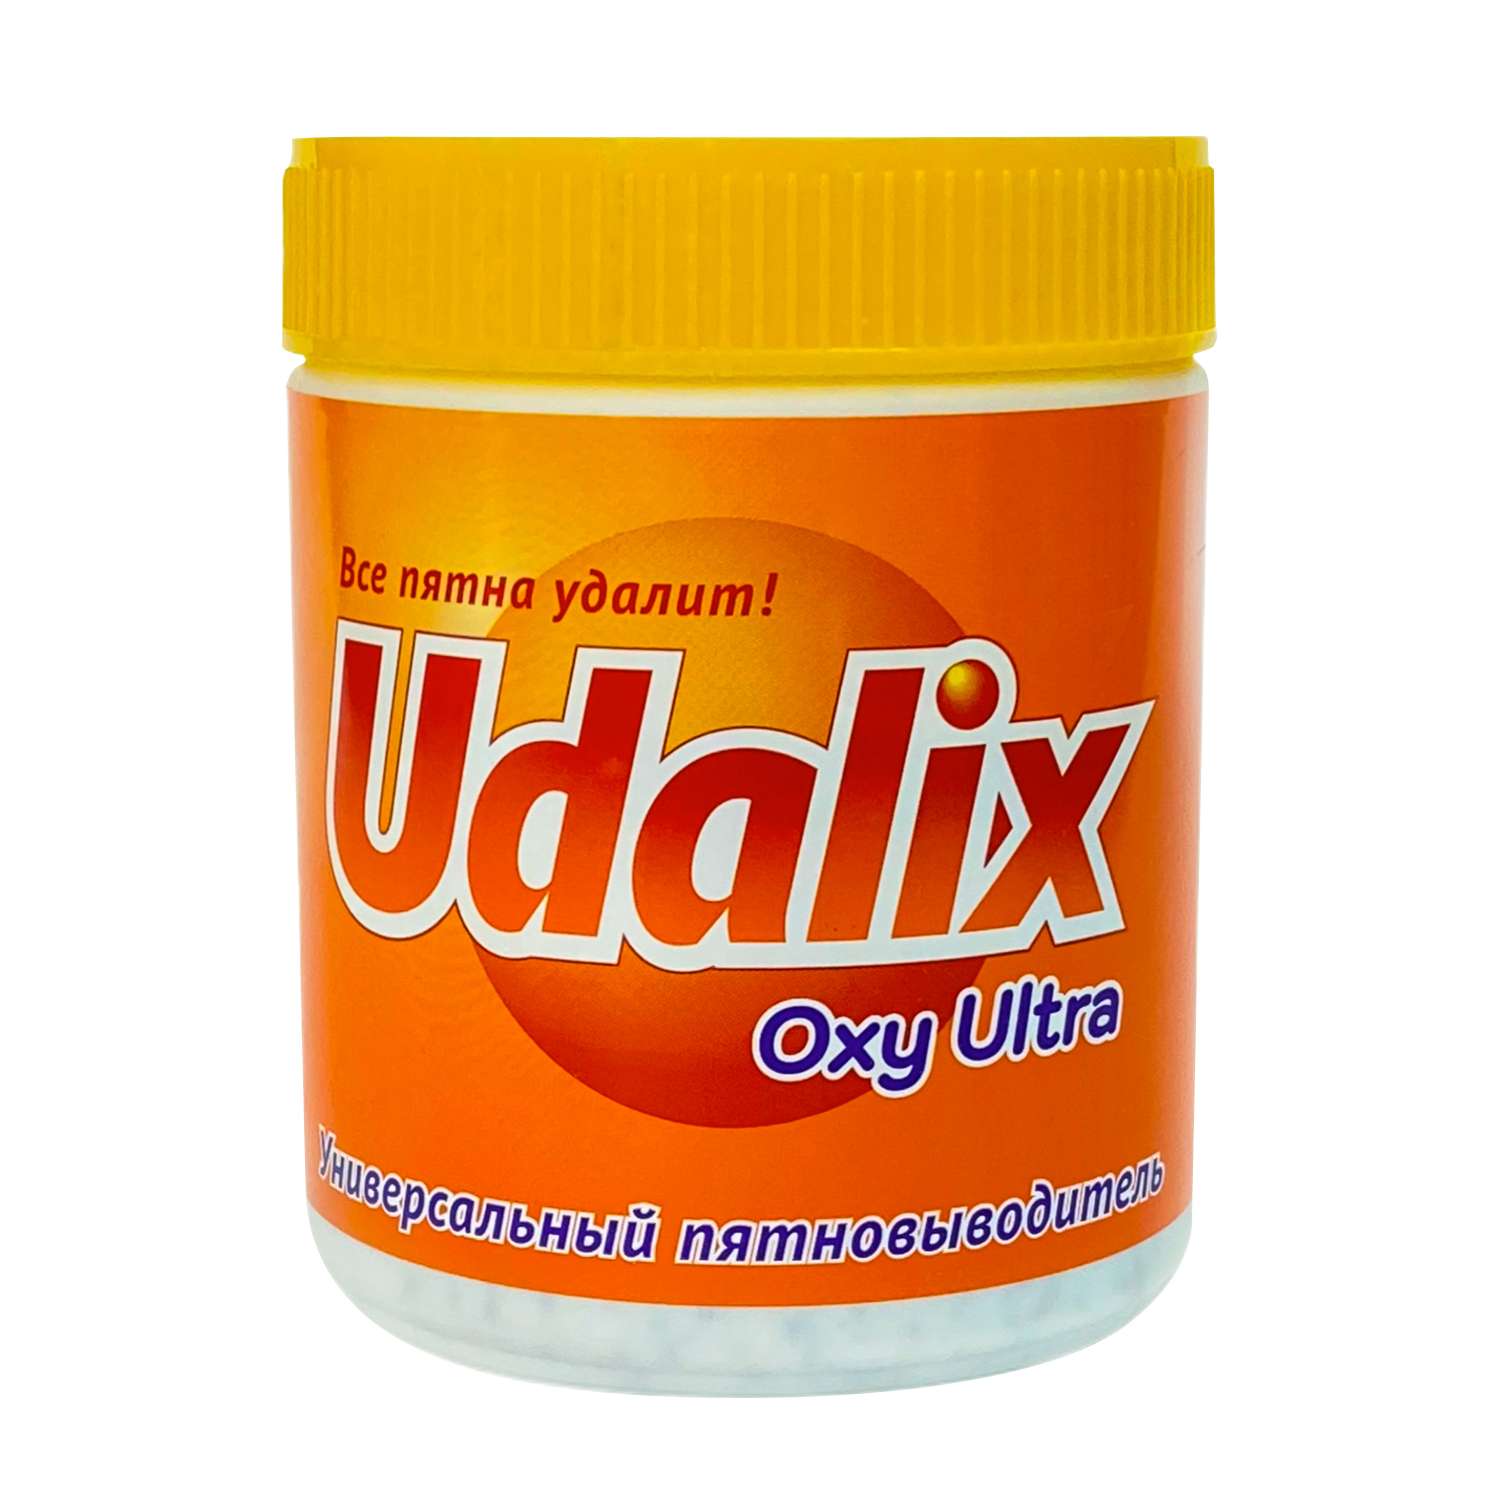 Пятновыводитель Udalix Oxy Ultra 500г - фото 1